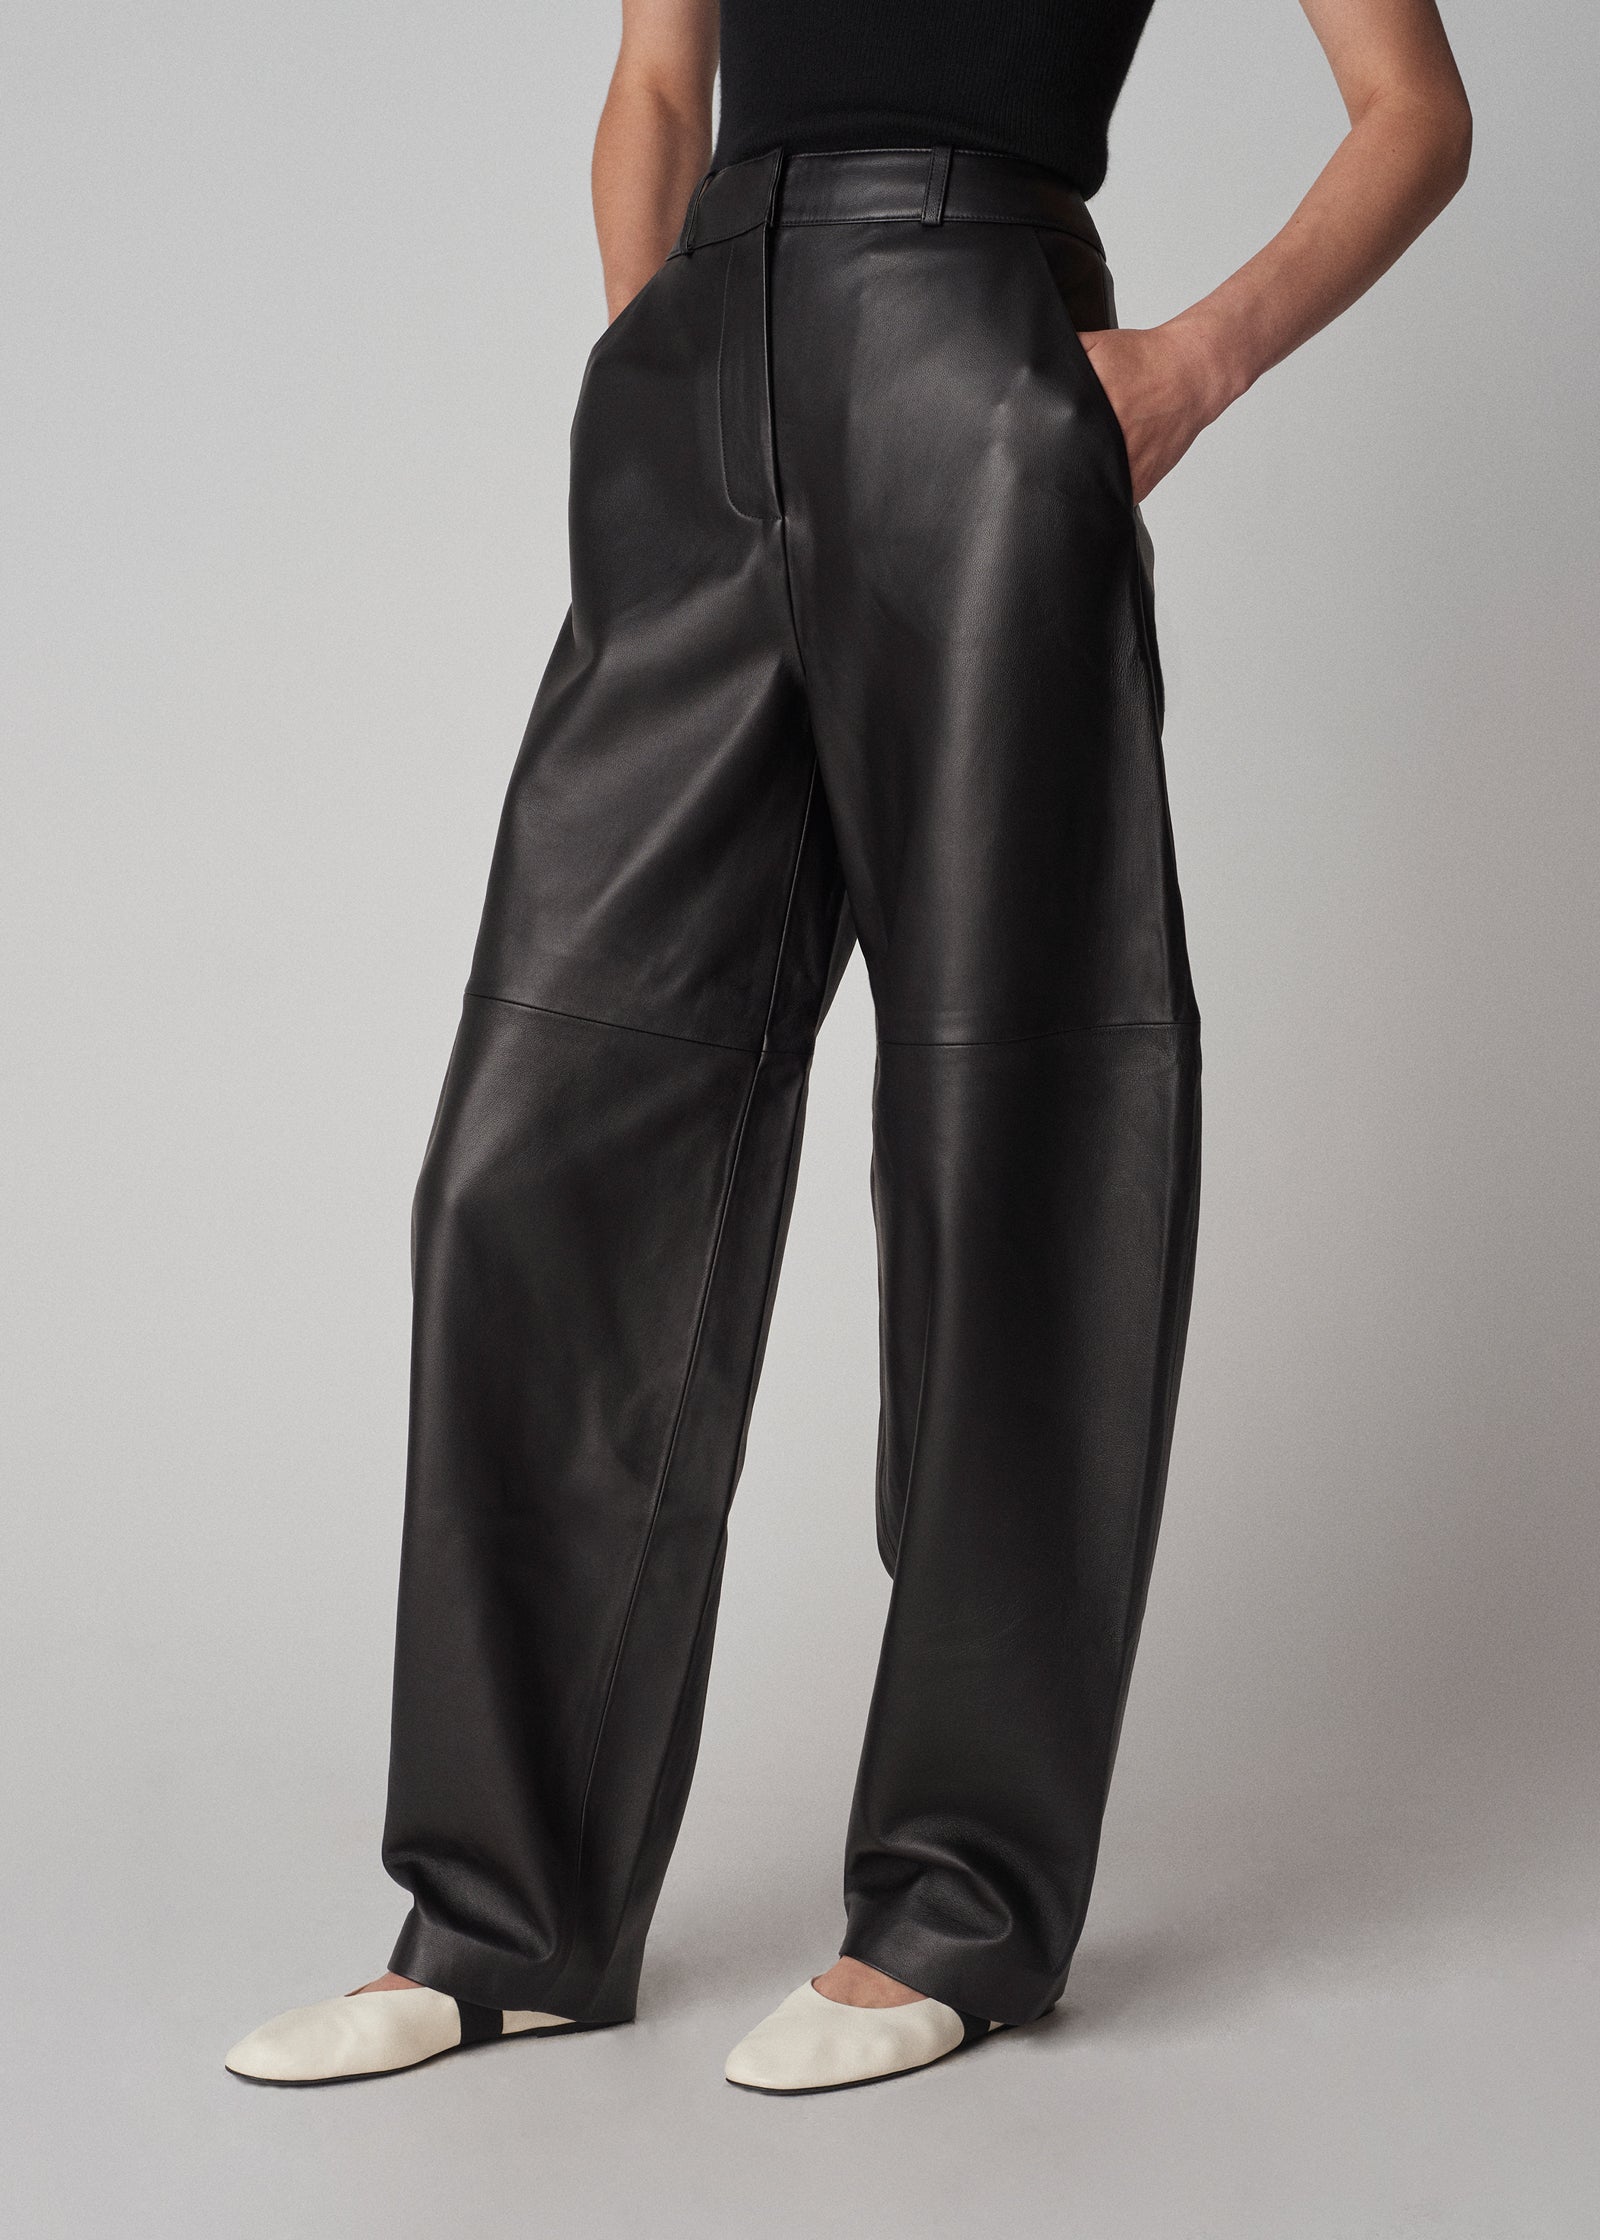 50% Off Clear!Tuscom Women's High Waist Pocket Wide Leg Jeans Flared Skinny  Button Trousers Gifts - Walmart.com